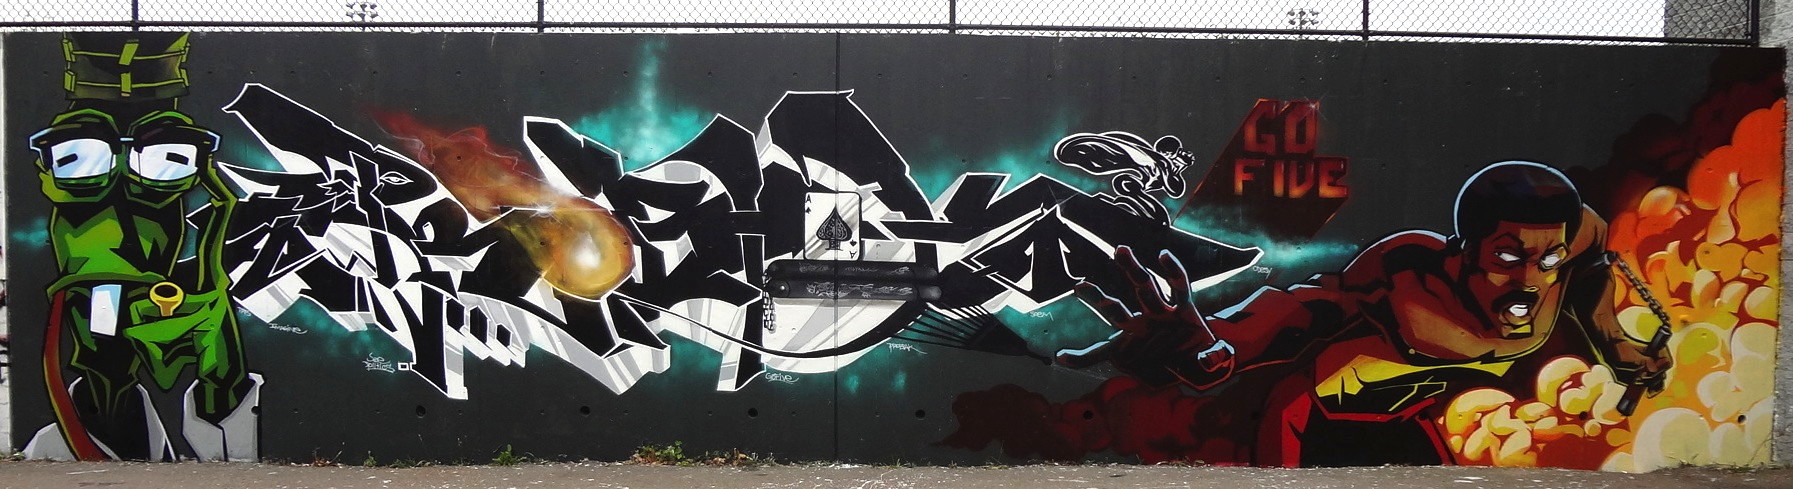 Art Crimes - The Writing on the Wall - graffiti art worldwide